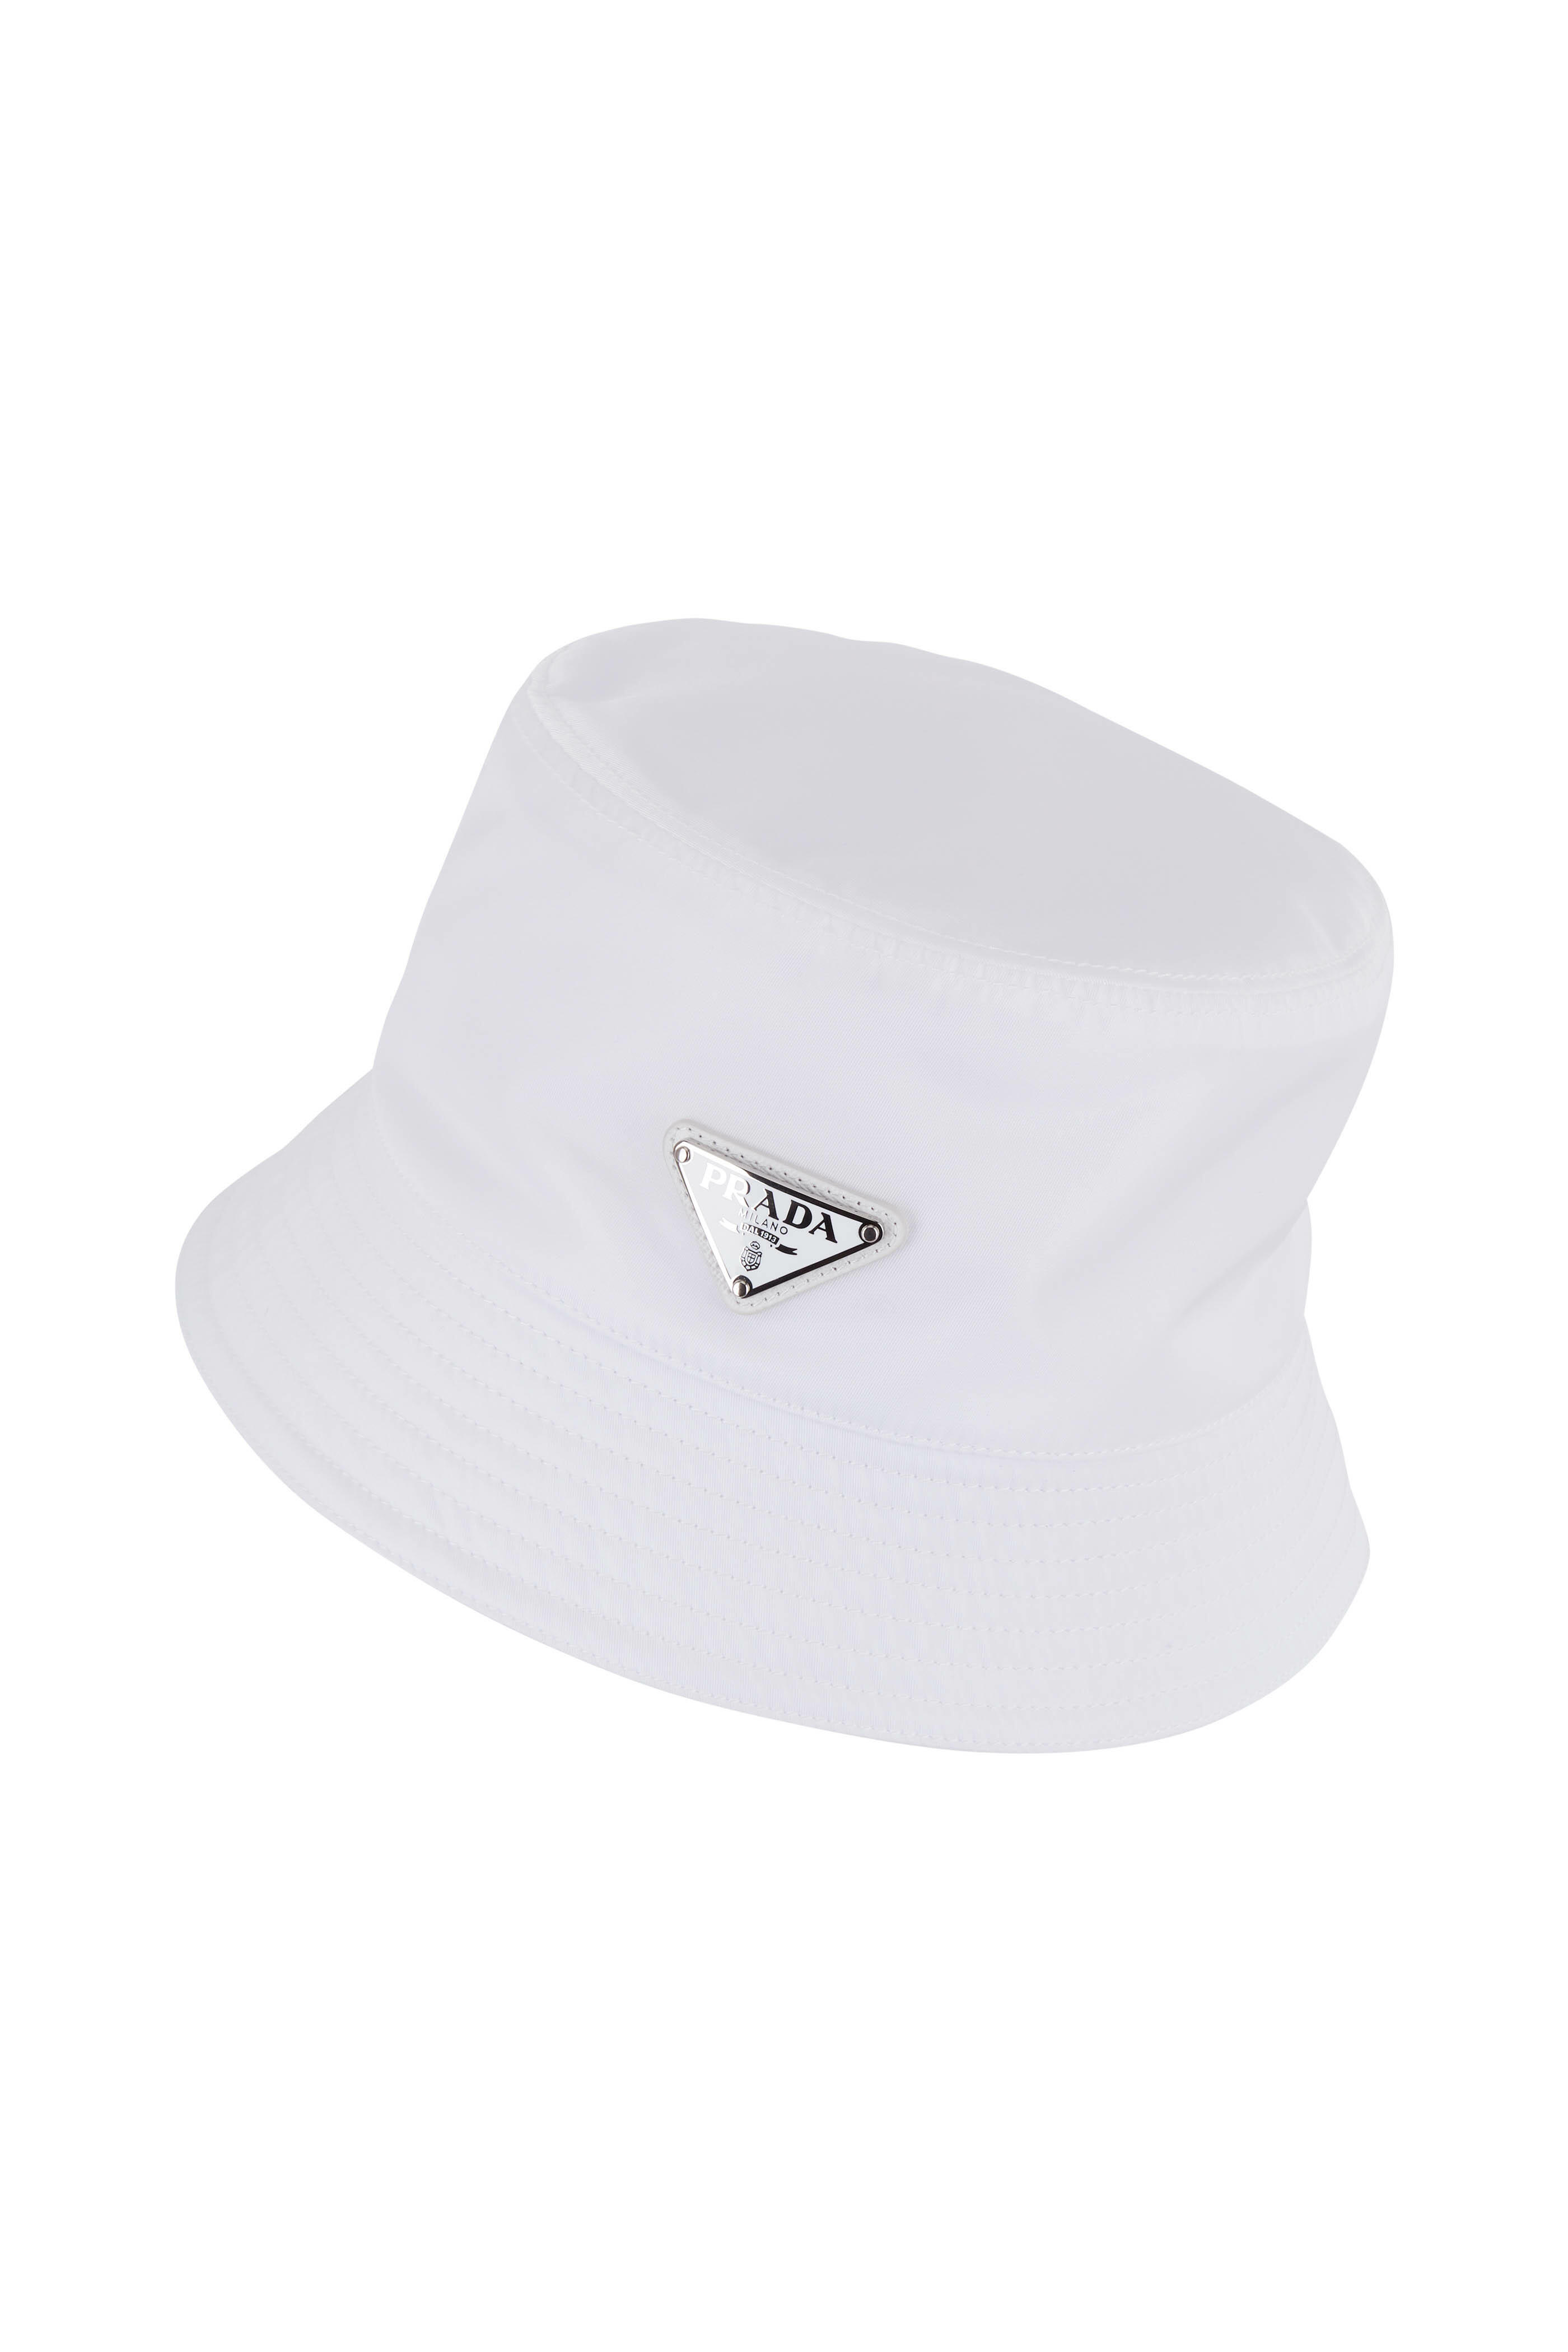 PRADA Bucket Hat - Black for Men